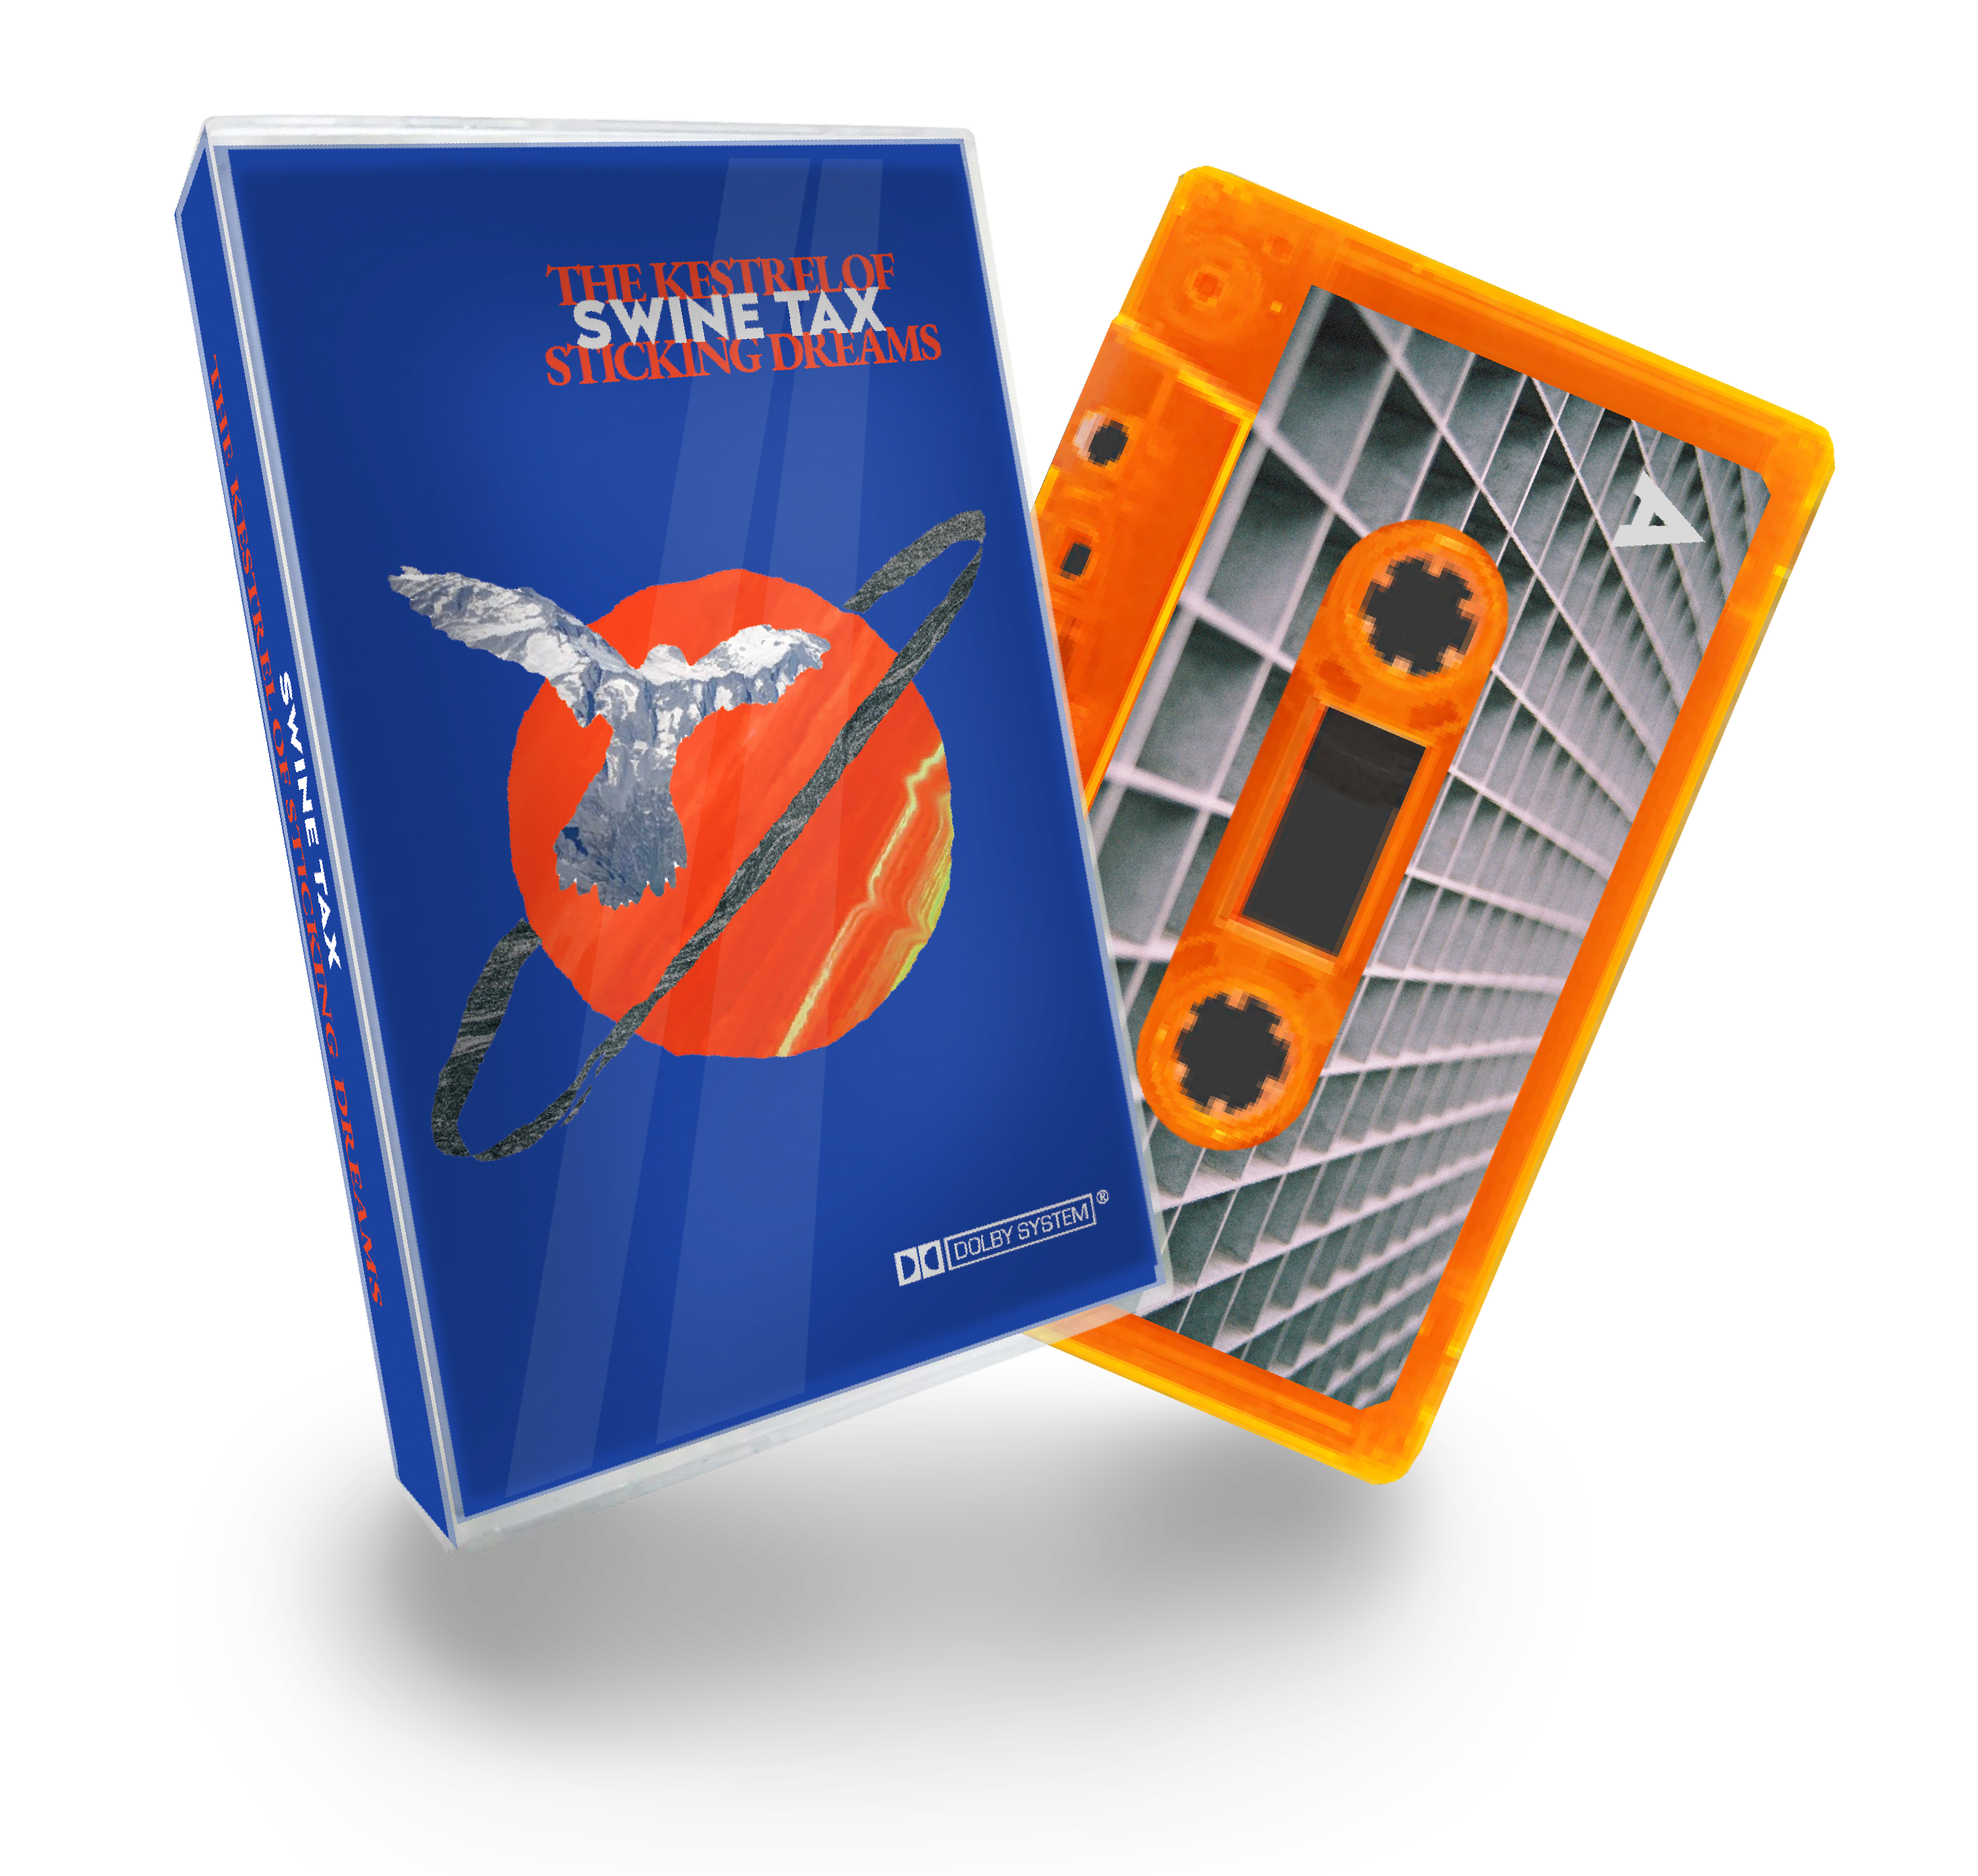 Swine Tax - ‘Kestrel of Sticking Dreams’ Ltd Edition Cassette & Zine Duo - Transparent Orange